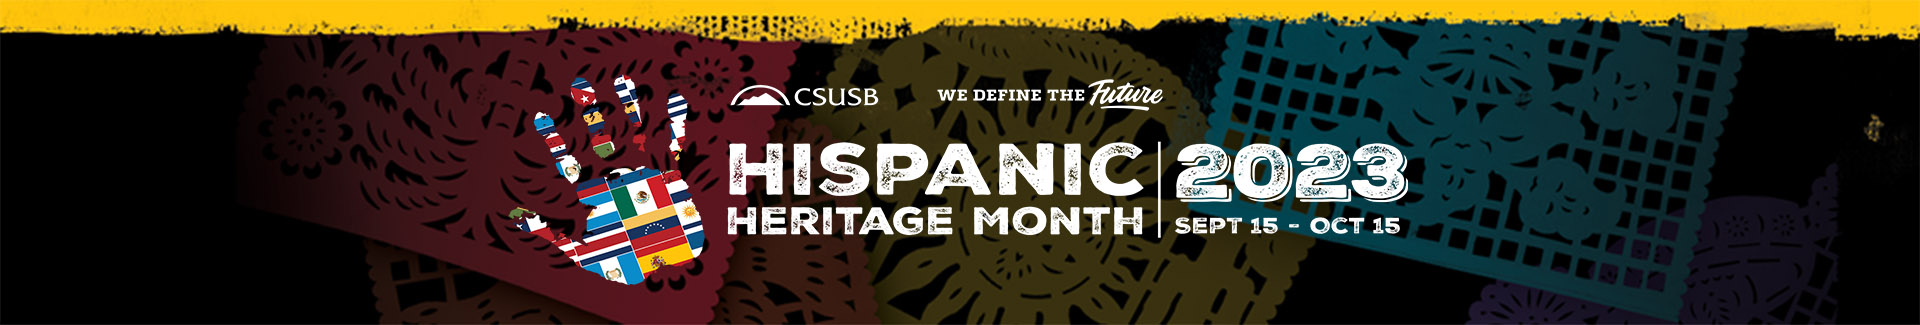 Hispanic Heritage Month 2023 Web Banner